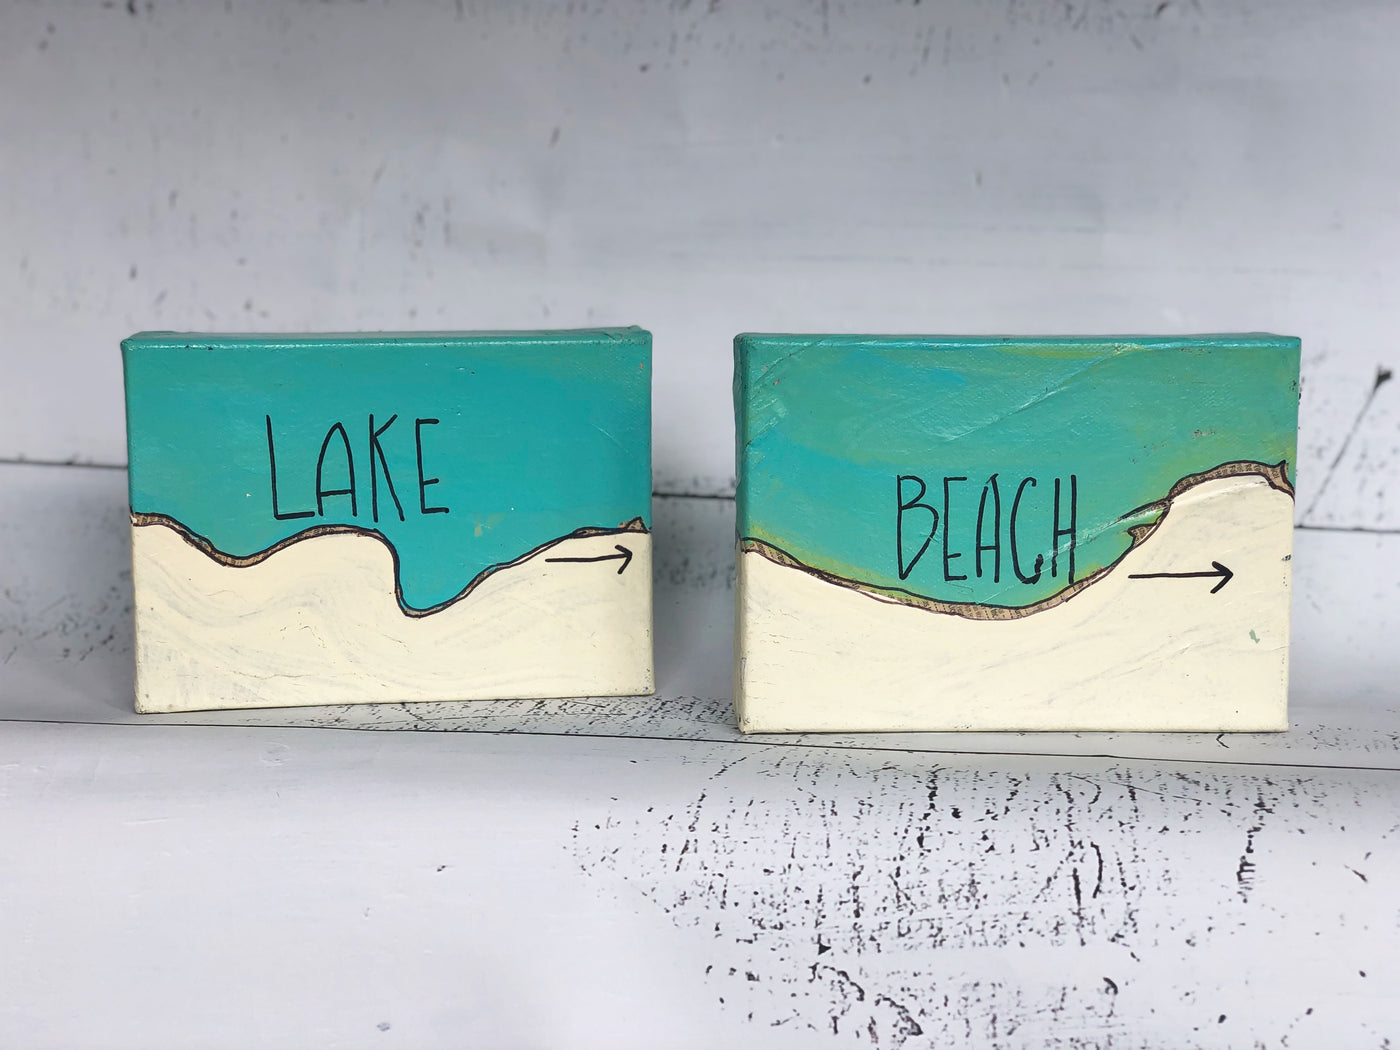 lake canvas word art